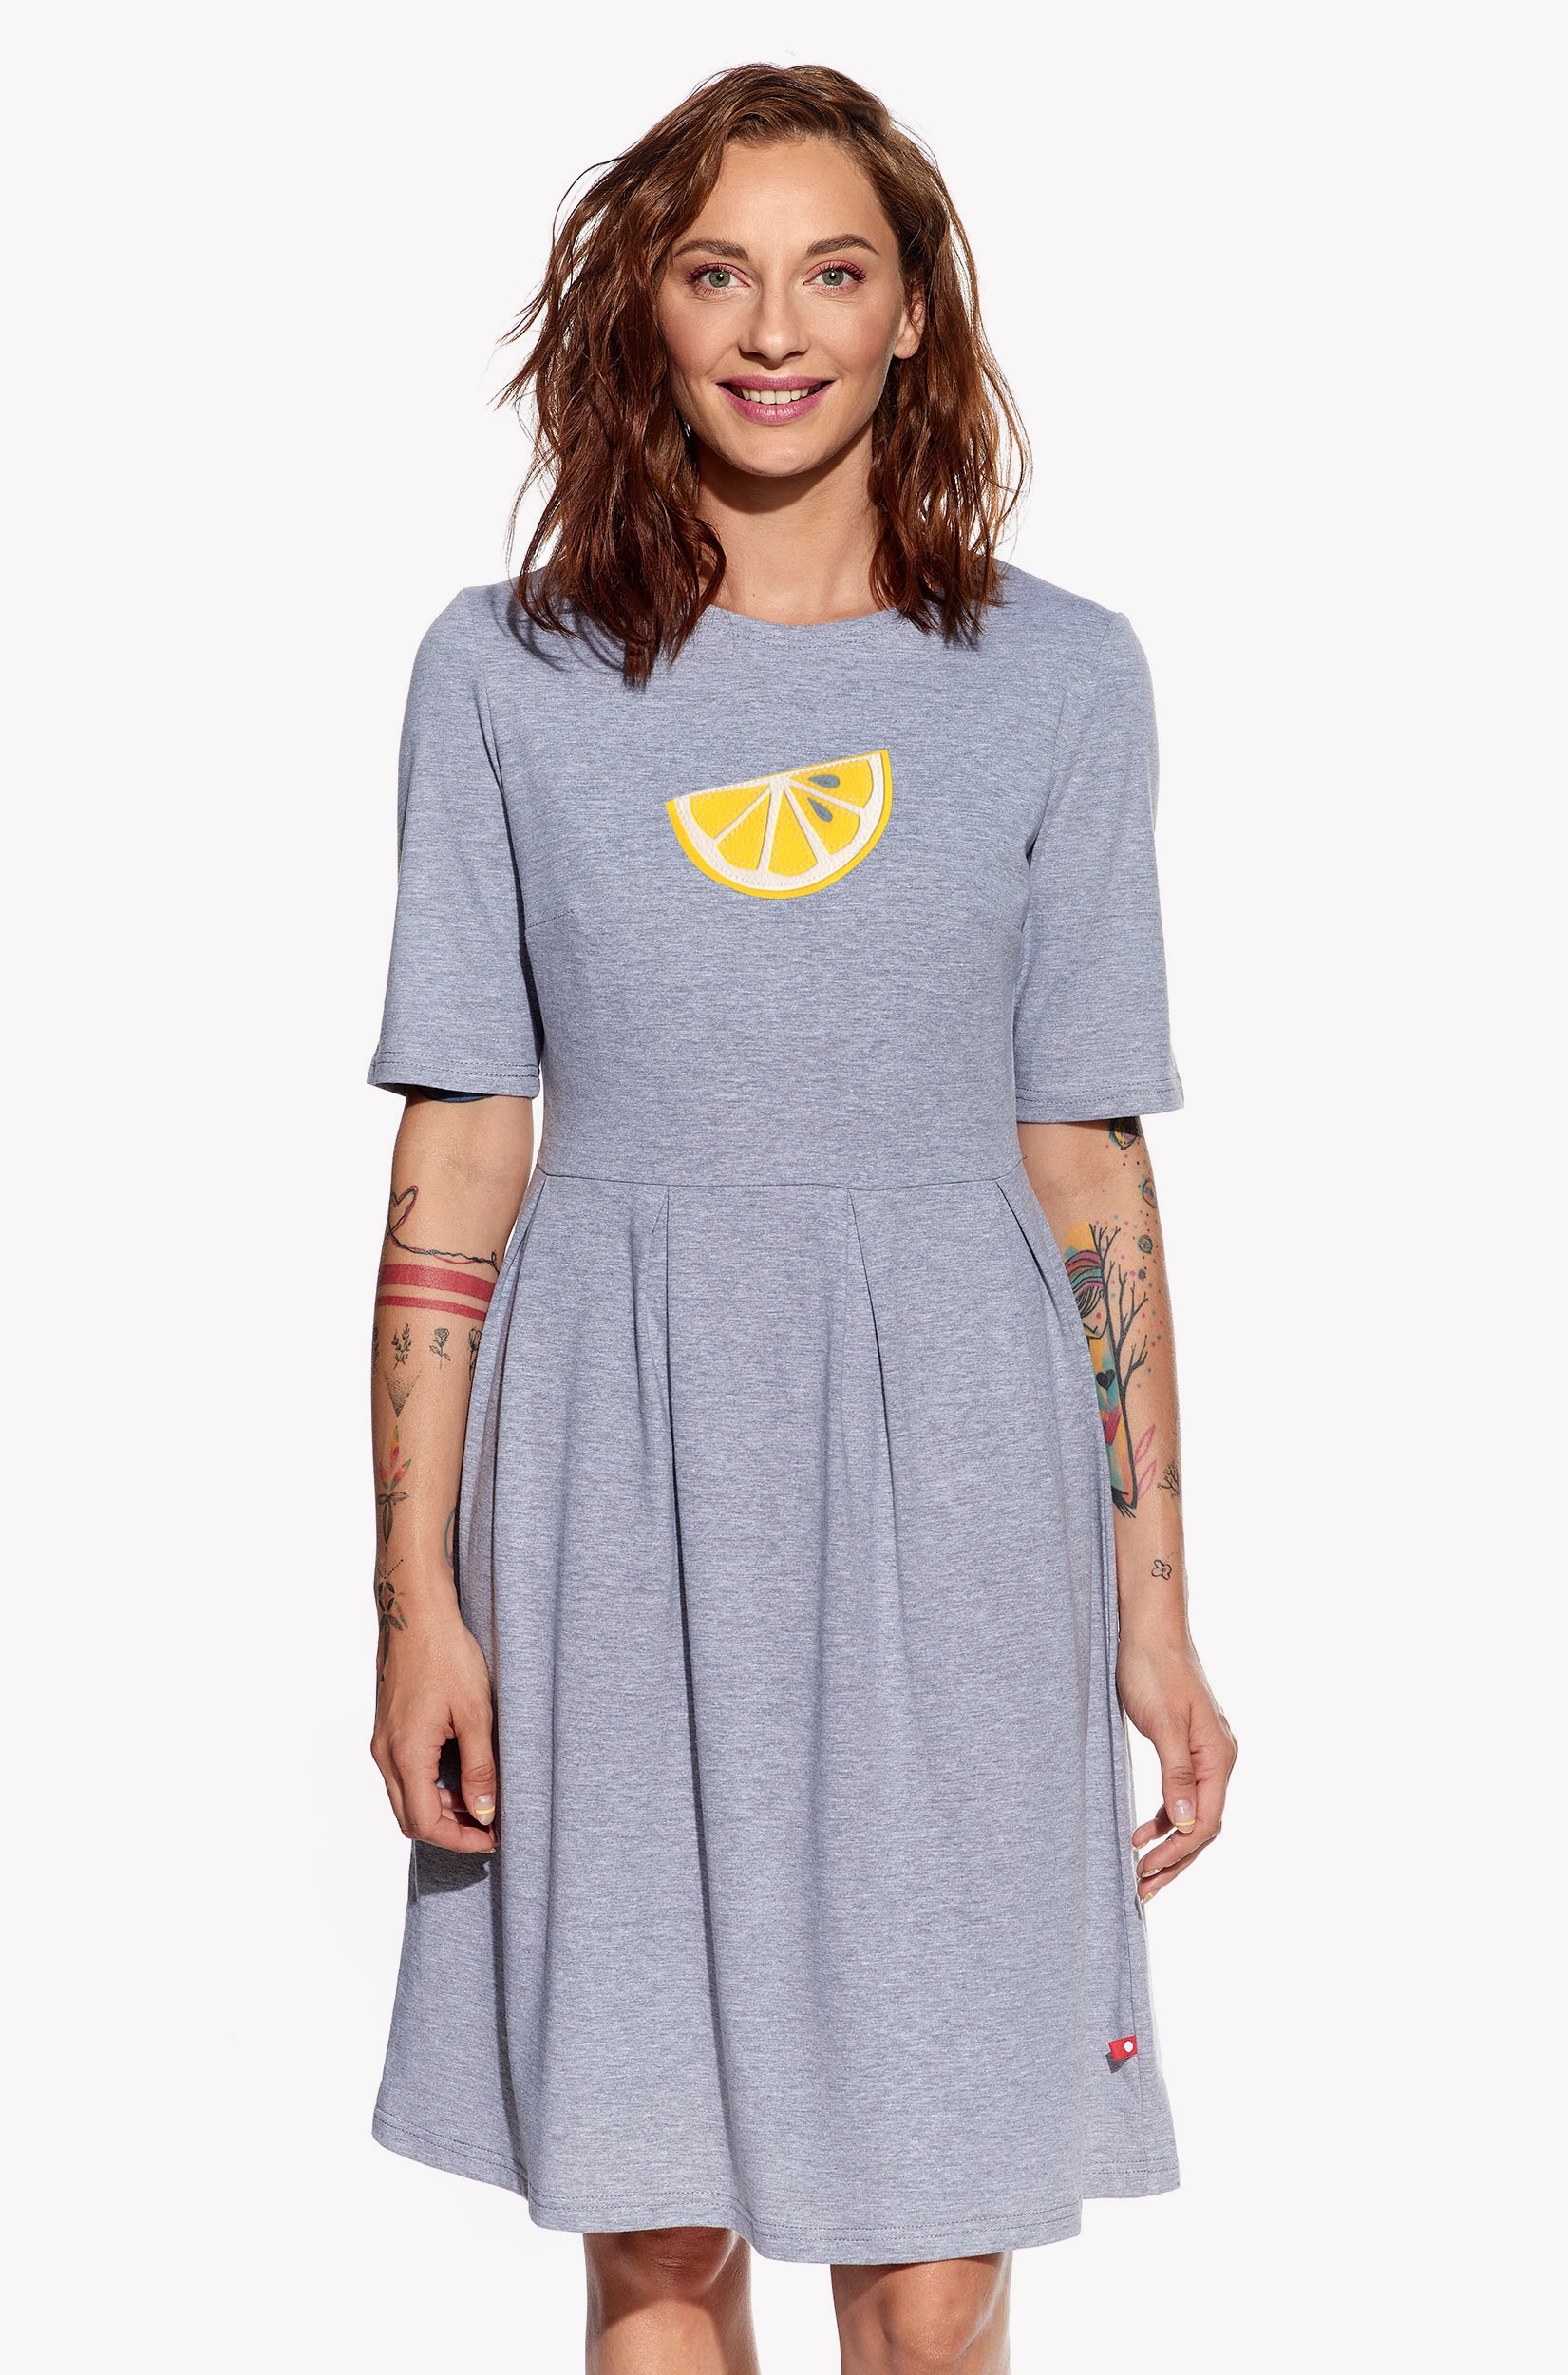 Dresses with lemon